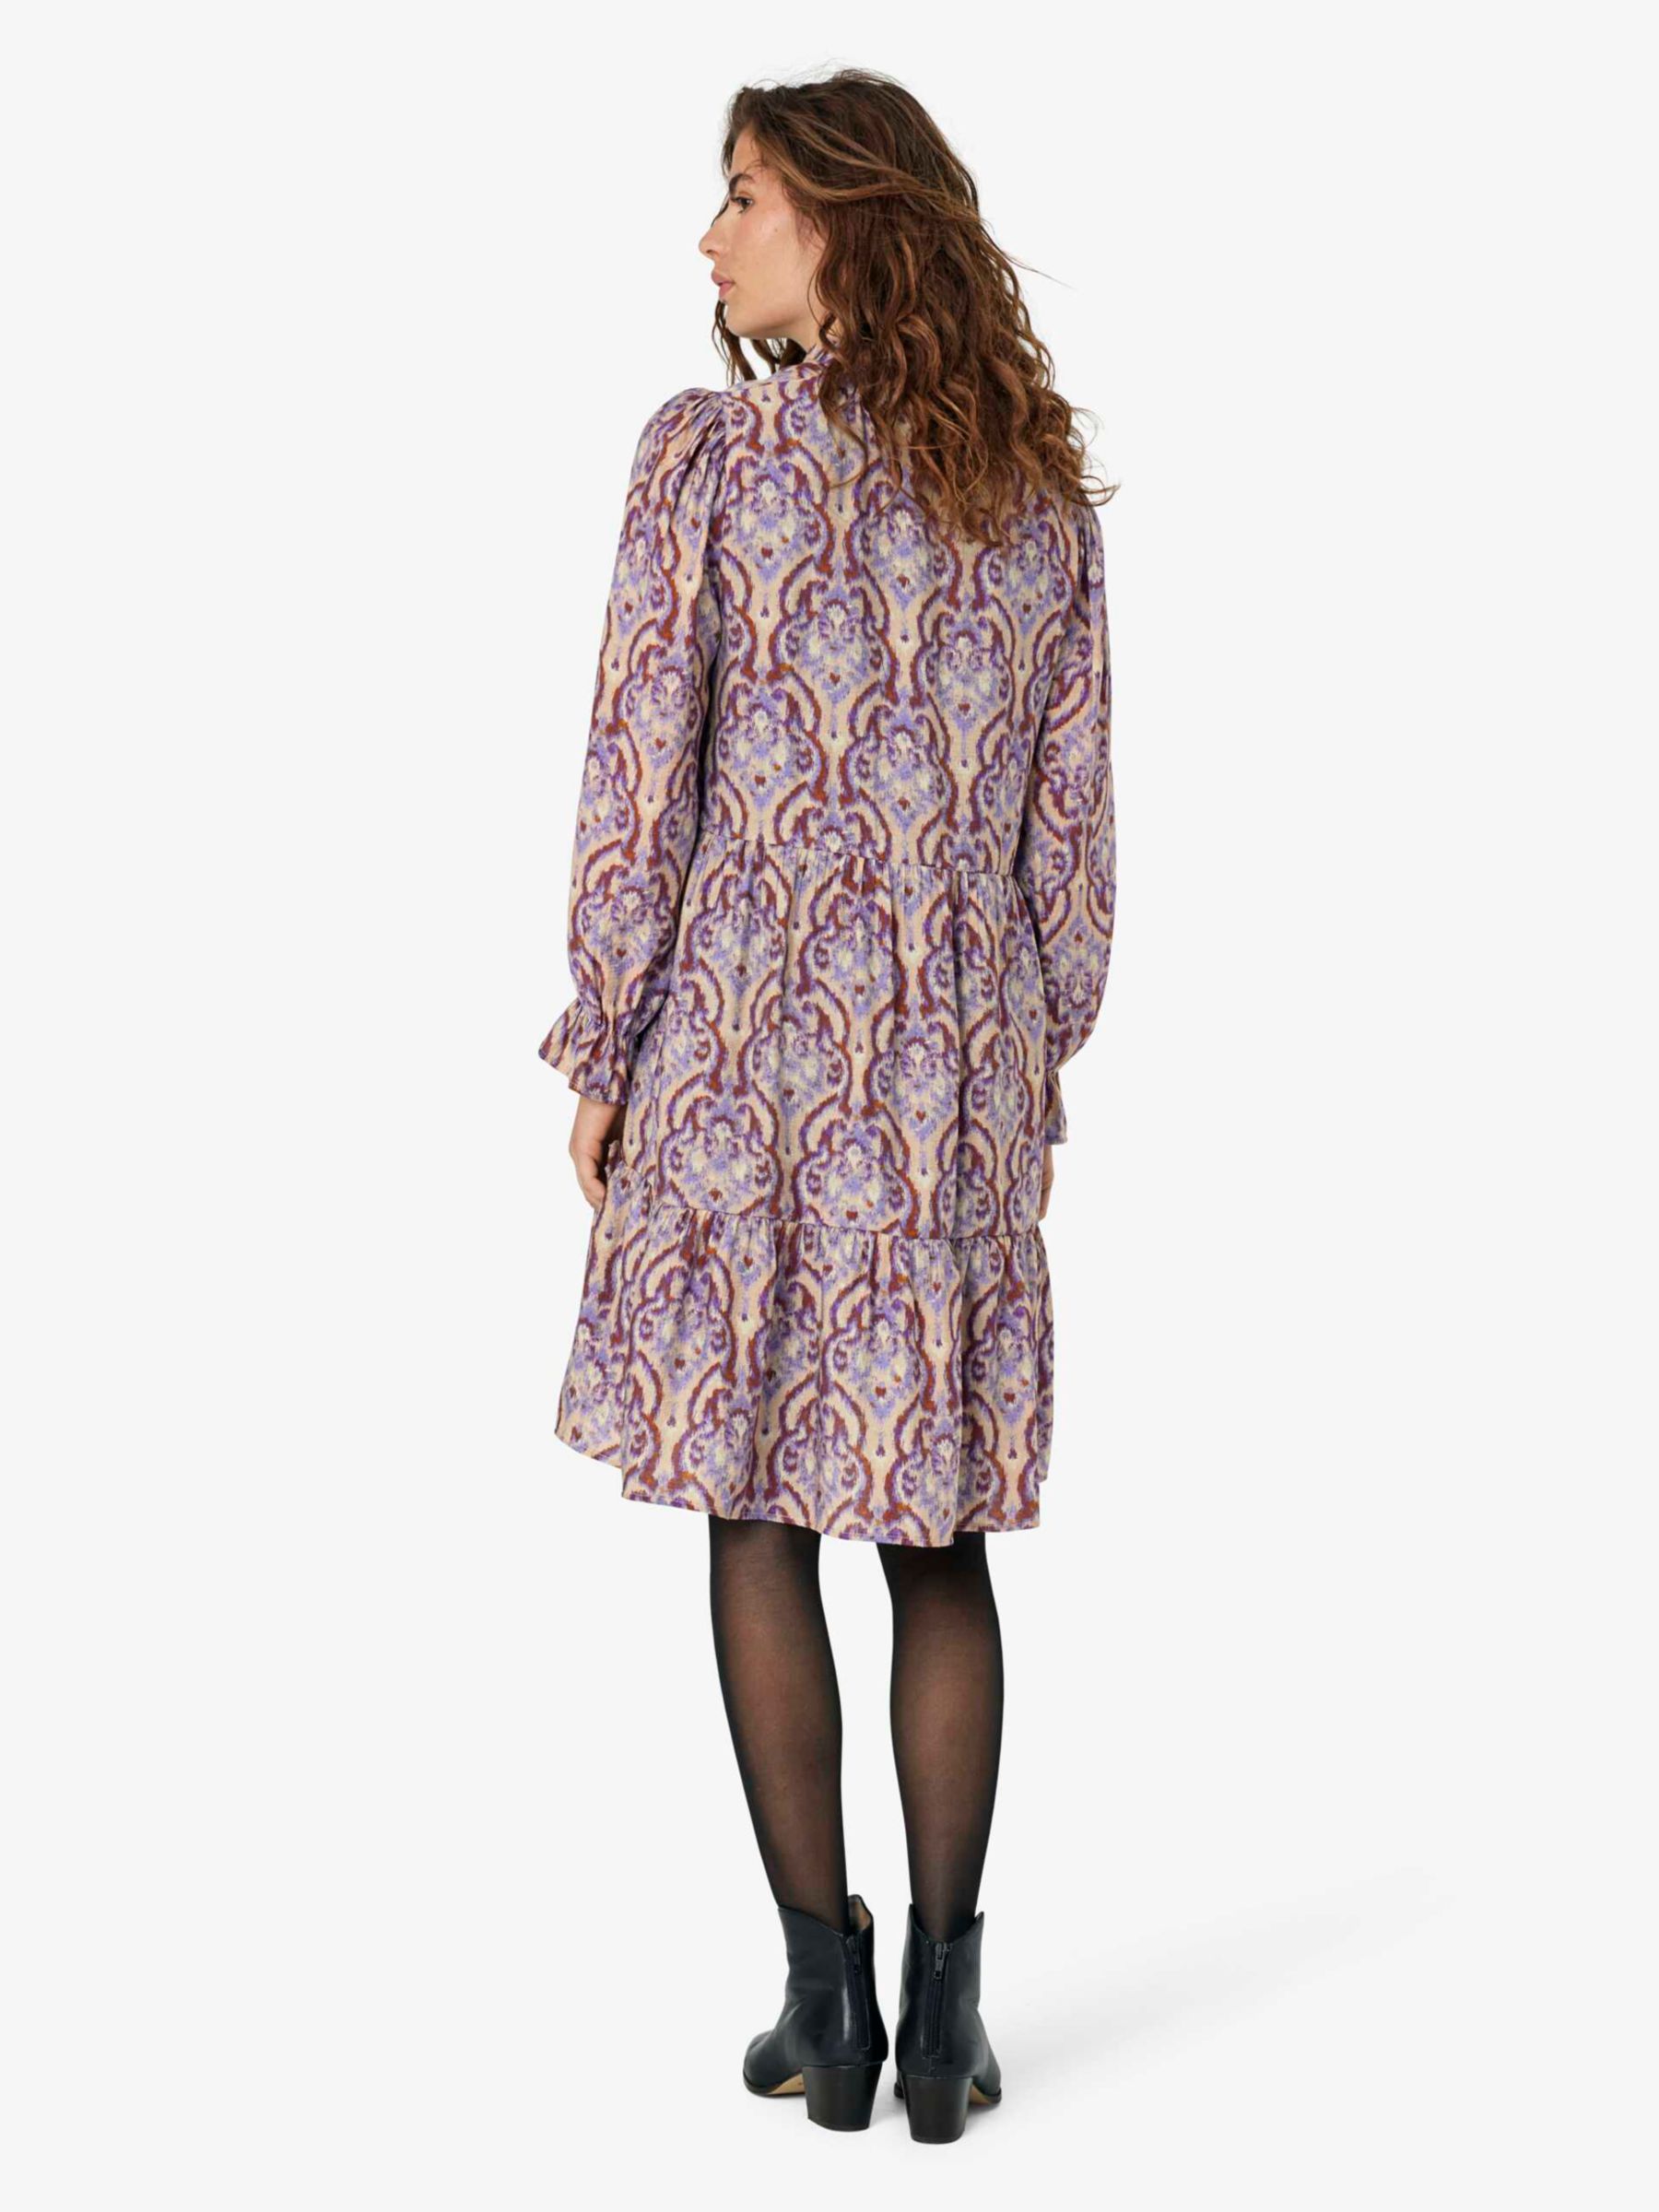 Noa Noa Mirabel Abstract Print Dress, Purple/Beige, 14